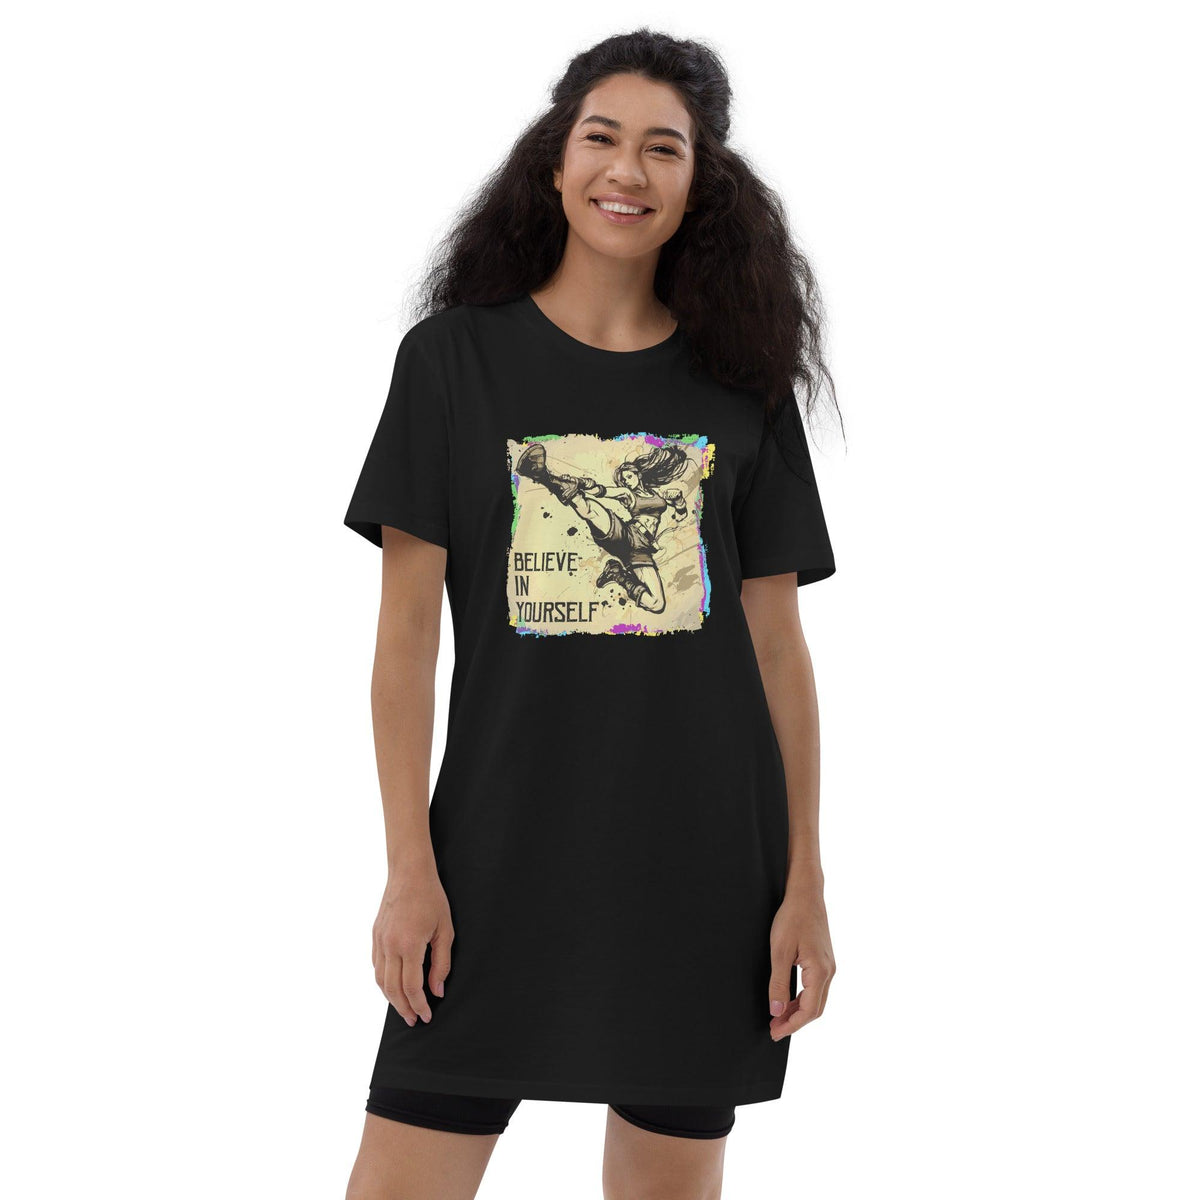 Believe In Yourself Organic cotton t-shirt dress - Beyond T-shirts